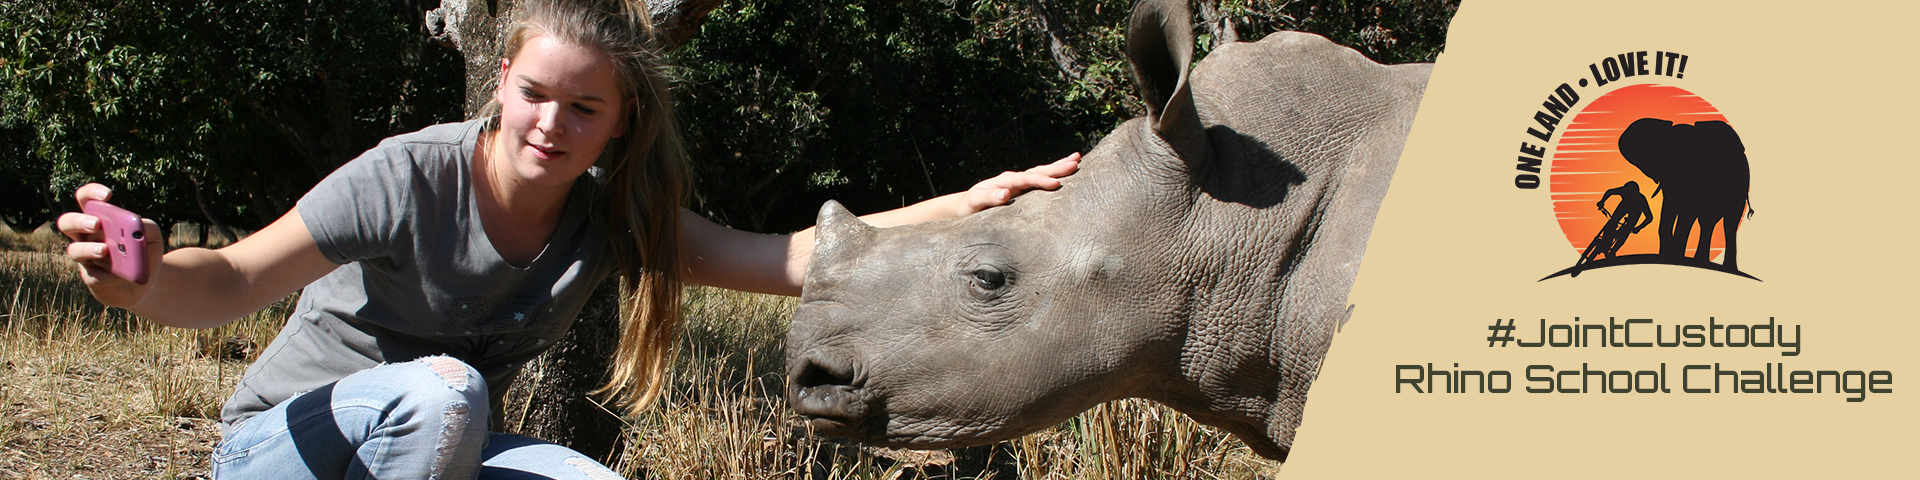 Save-rhinos-school-challenge-one-land-love-it